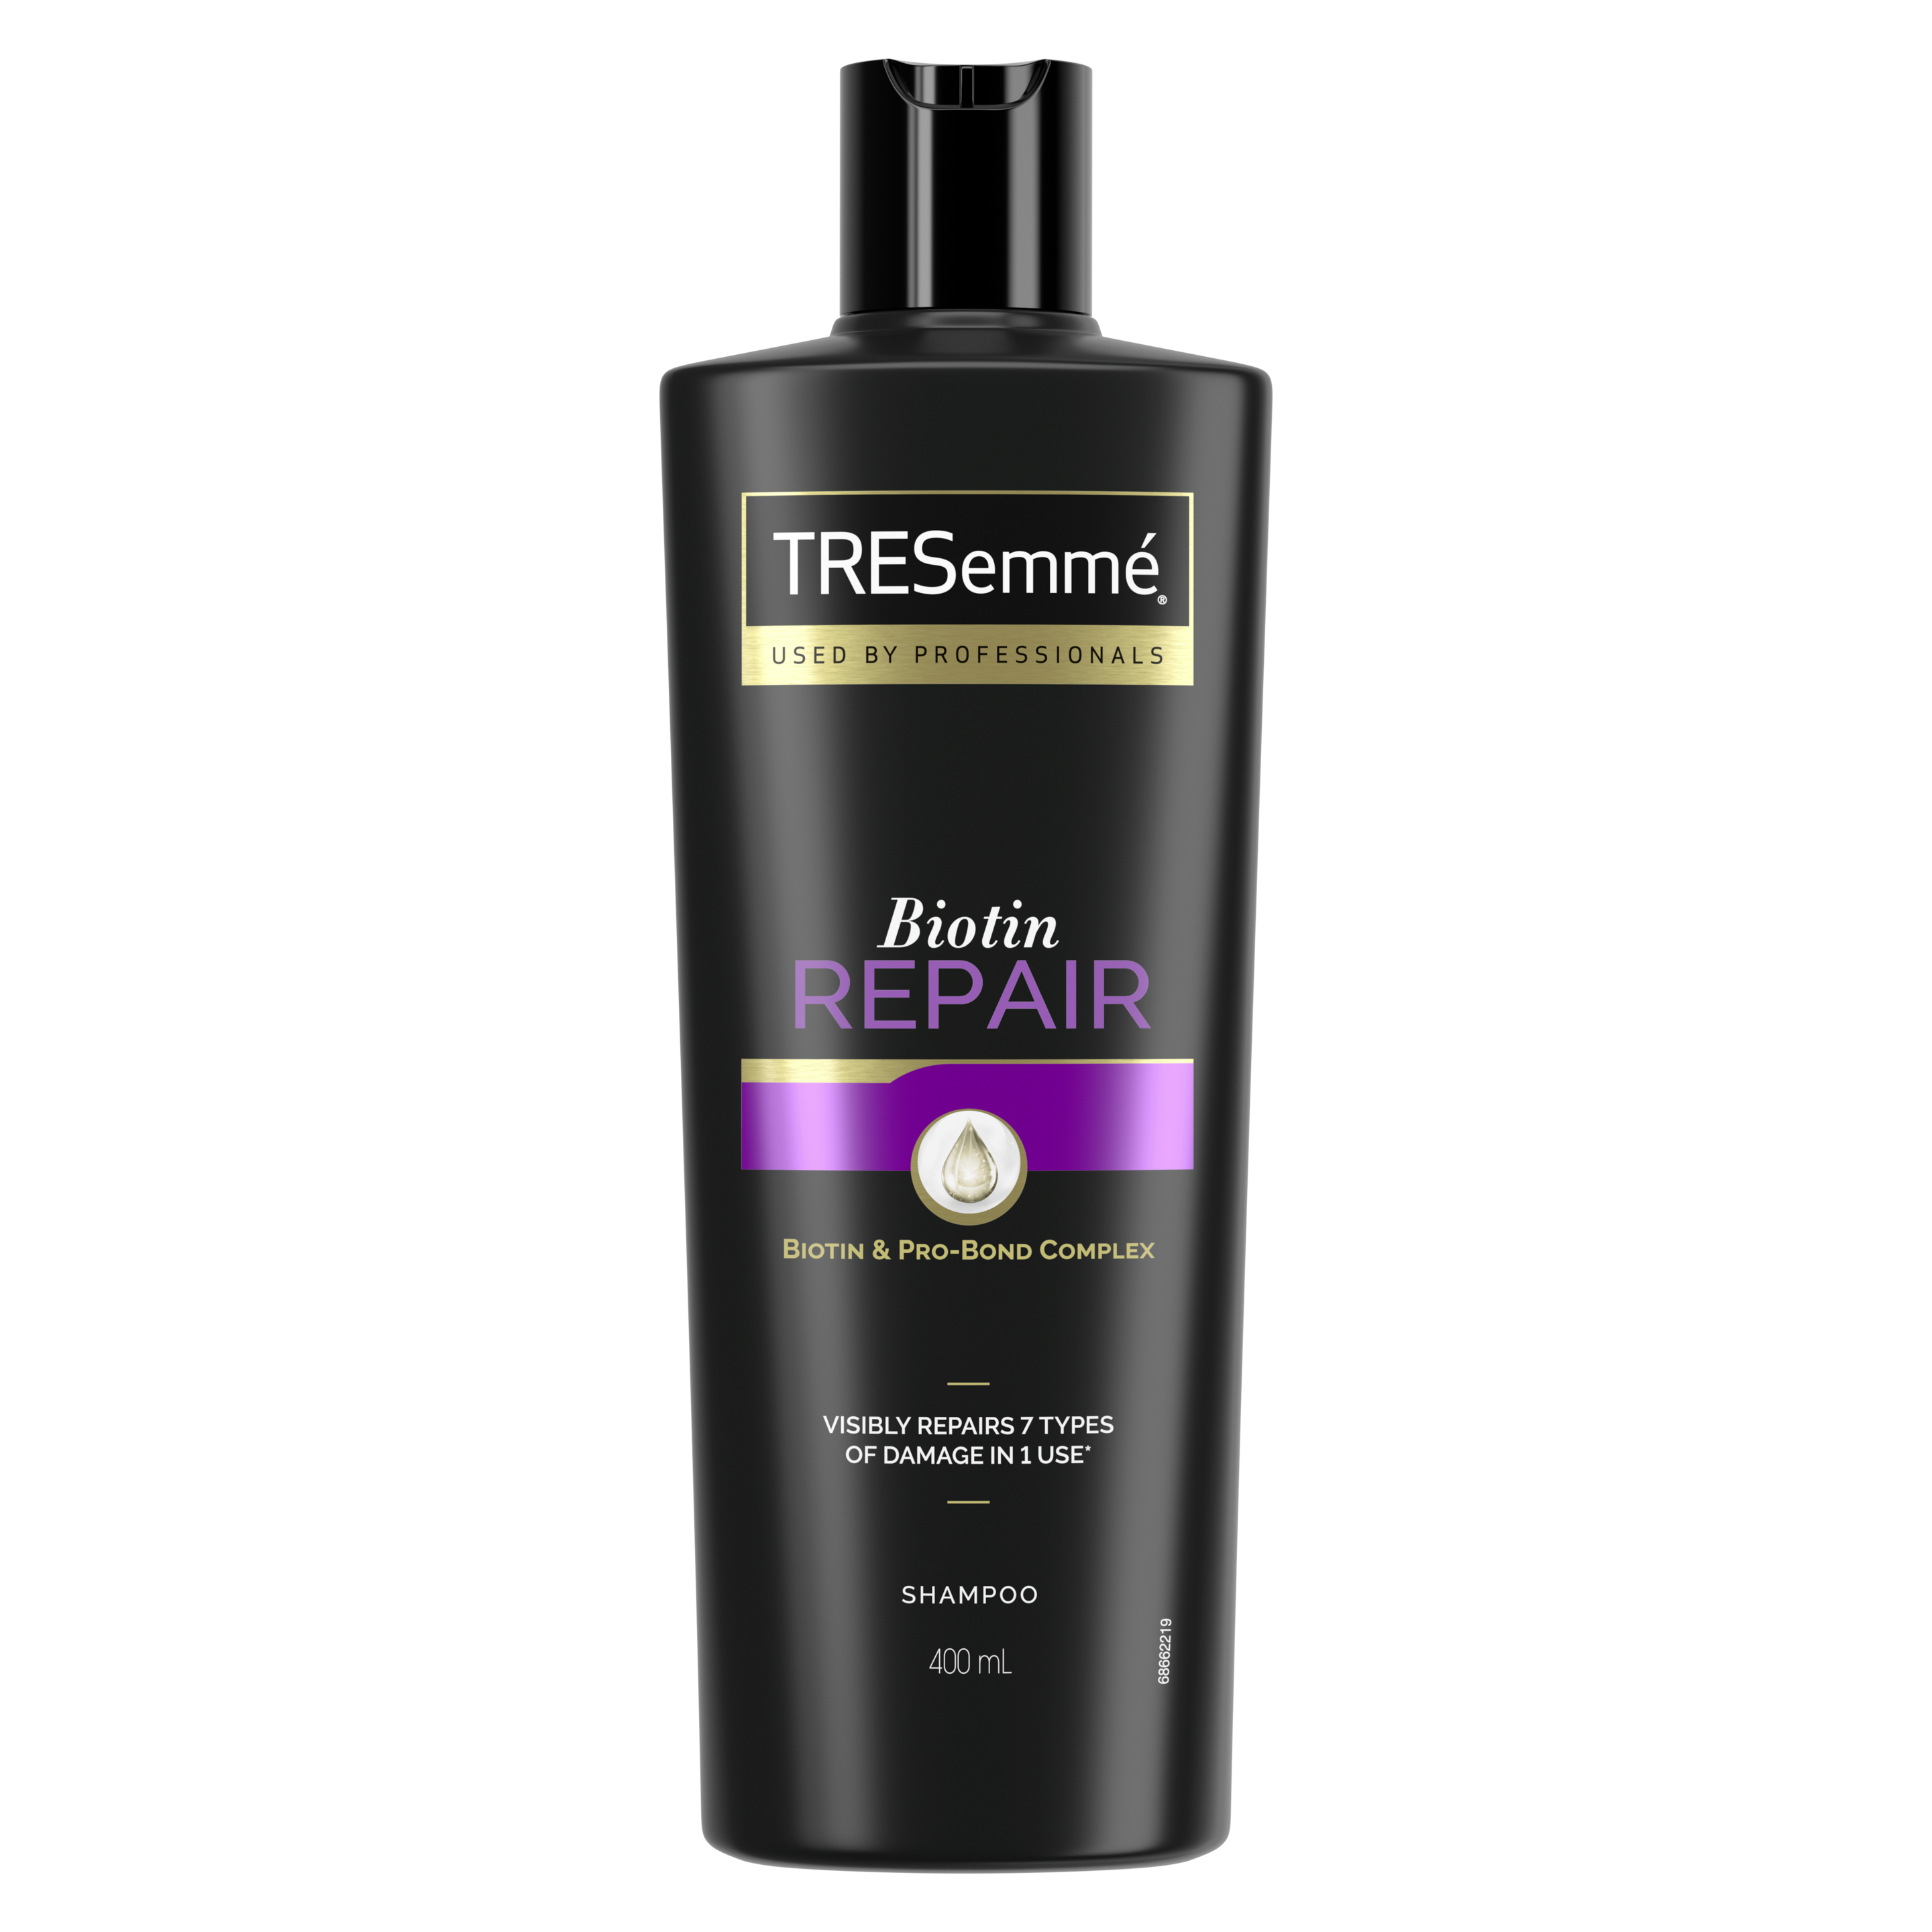 TRESemmé Biotin + Repair 7 Shampoo